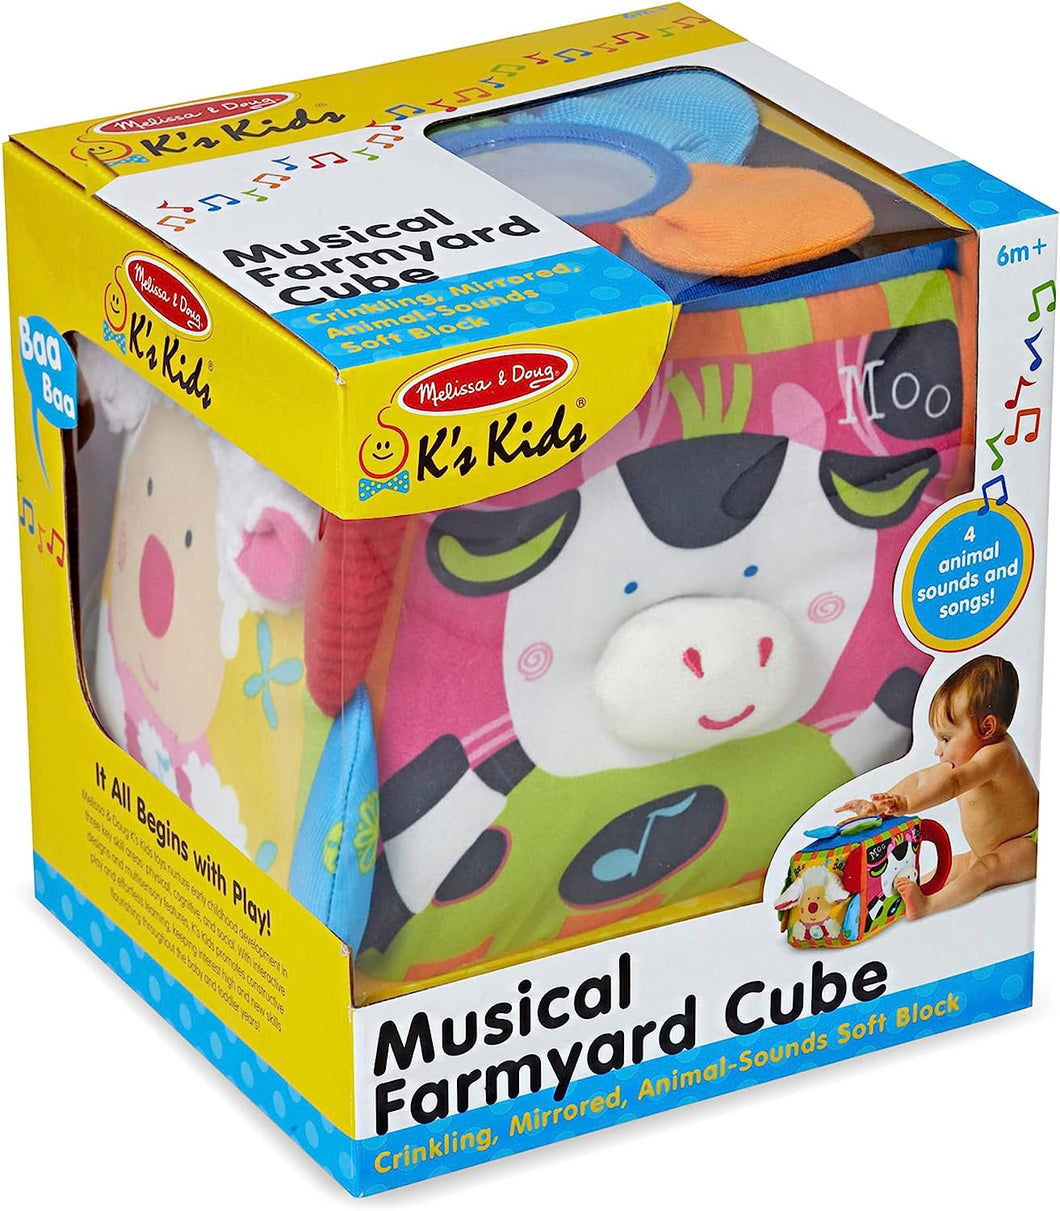 K's Kids Musical Farmyard Cube